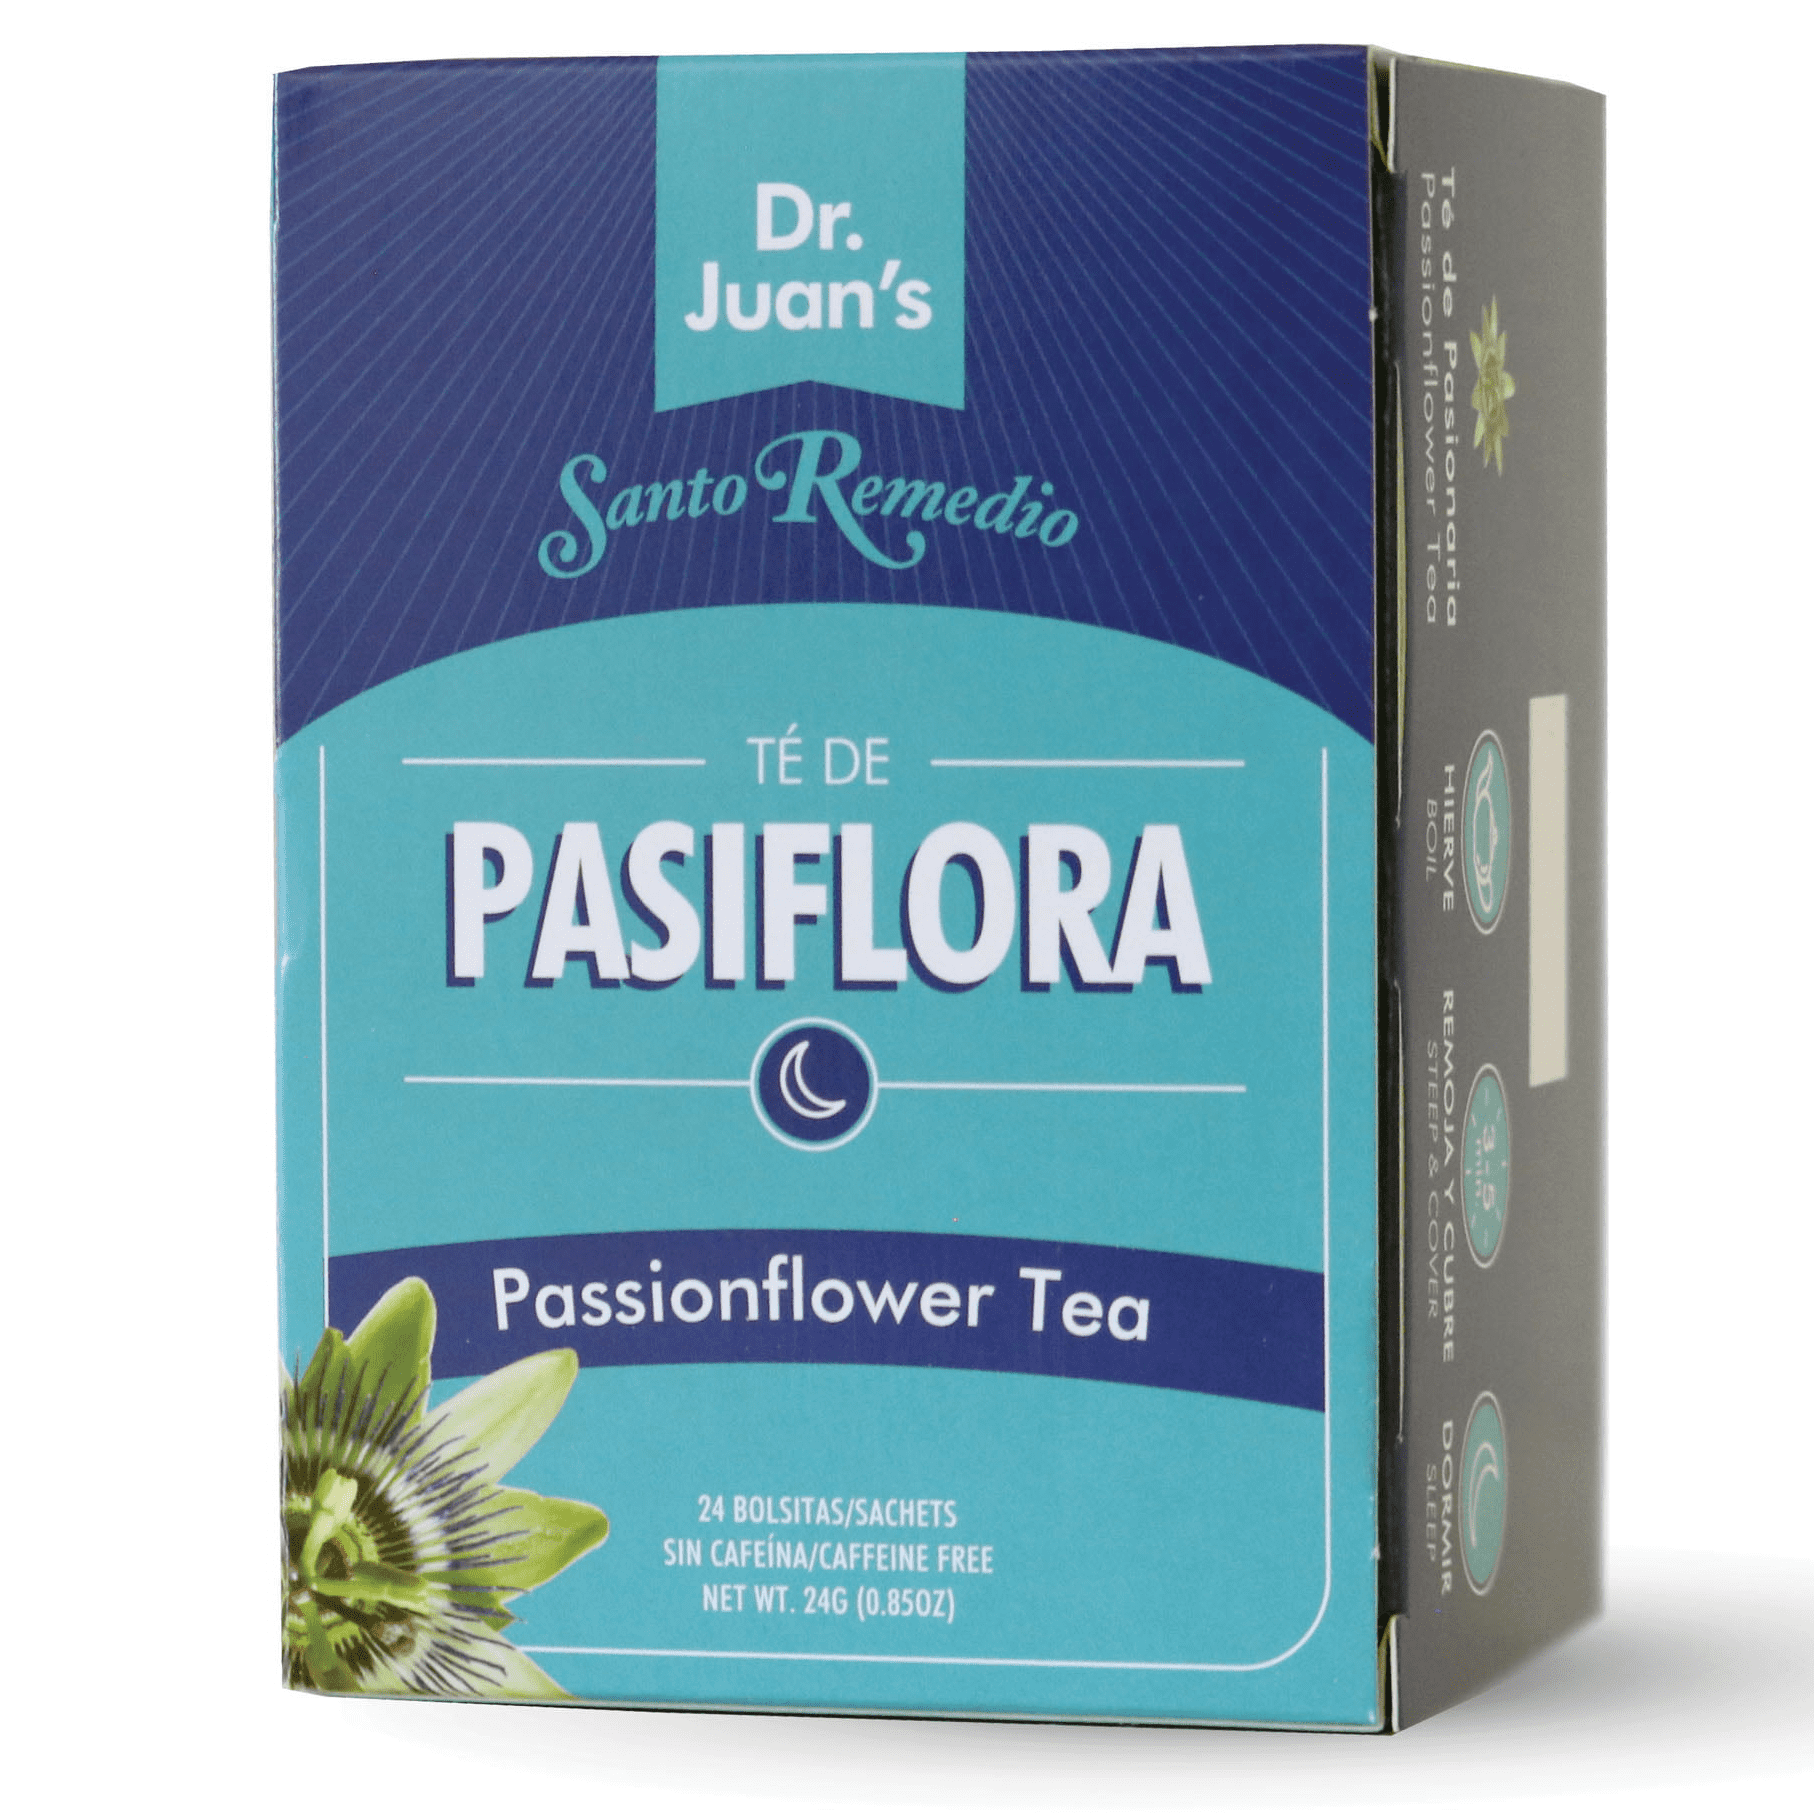 santo remedio caffeine-free passionflower herbal tea bag, 24 count, 0.85  oz., blue box